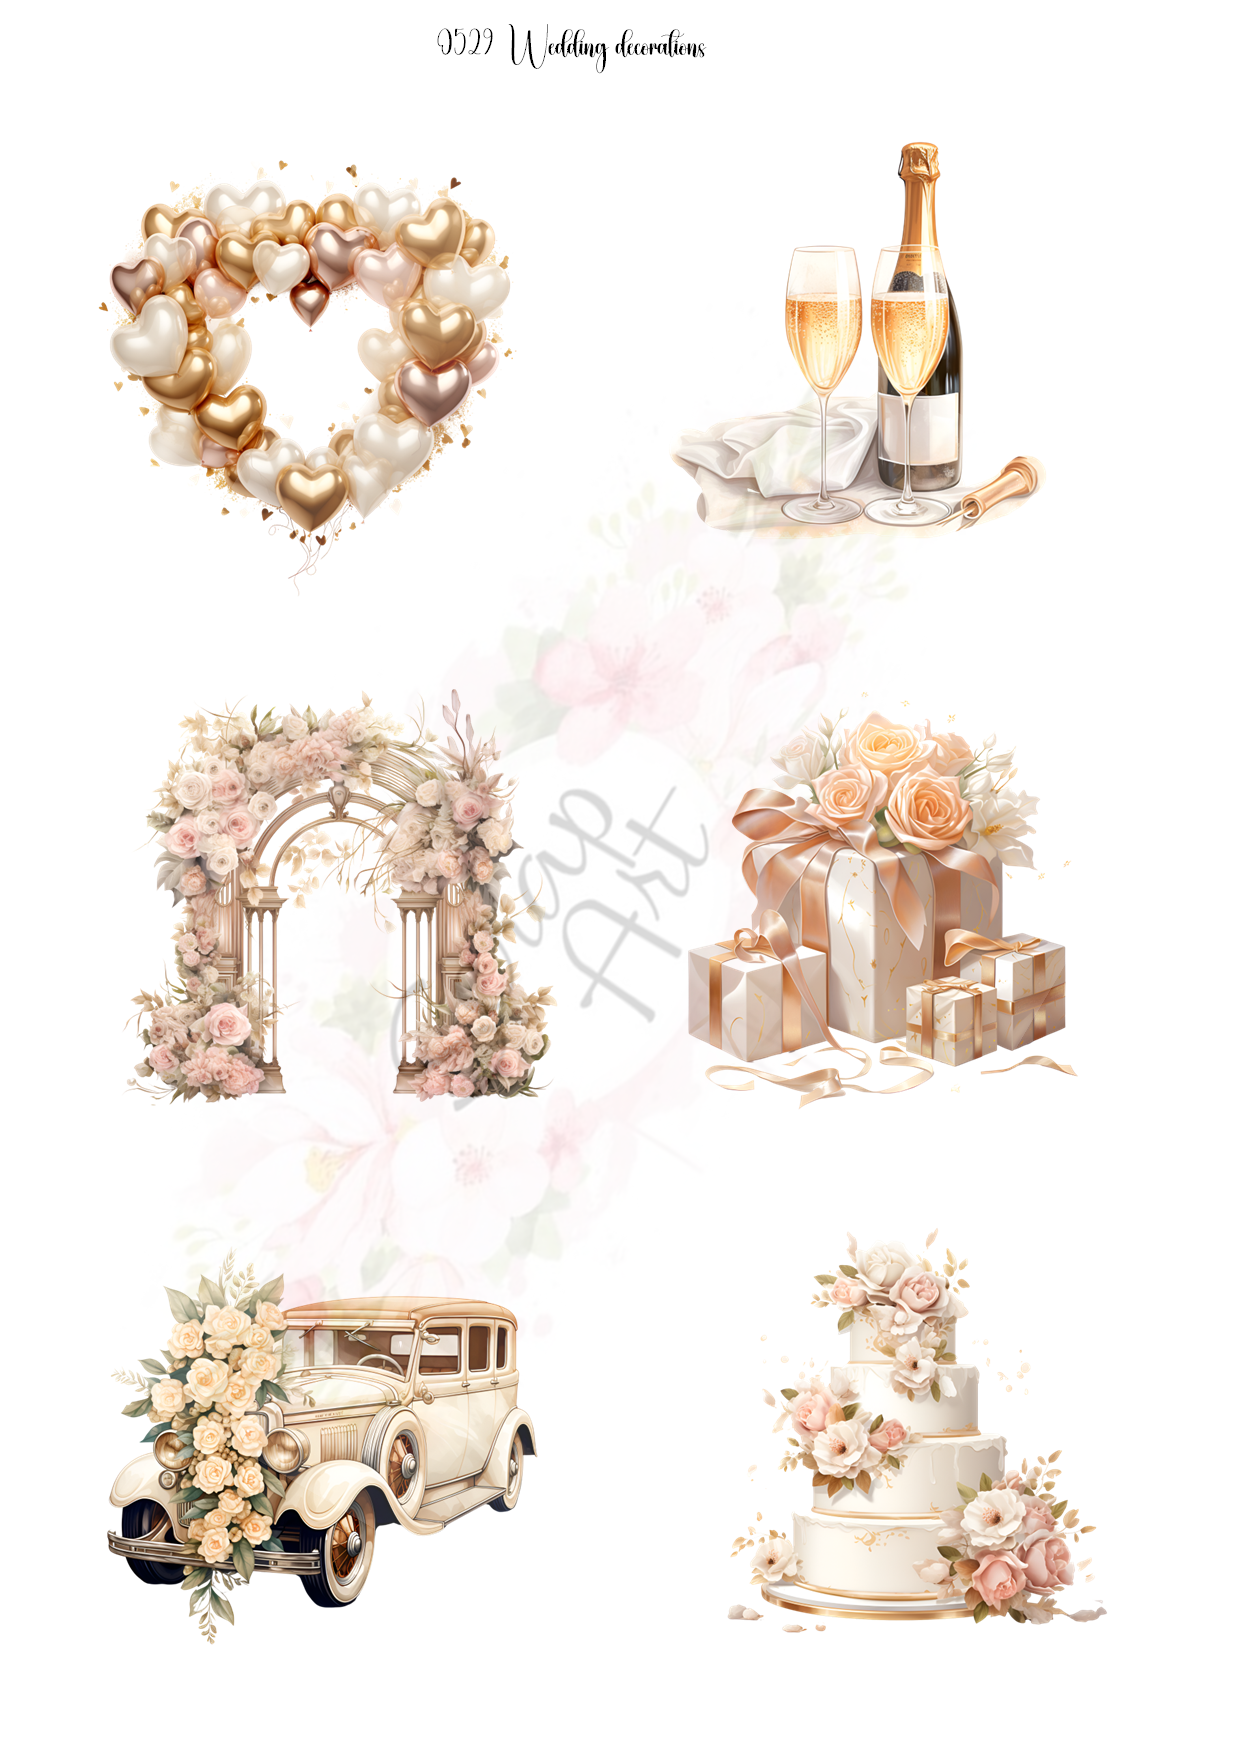 0529 Wedding decorations